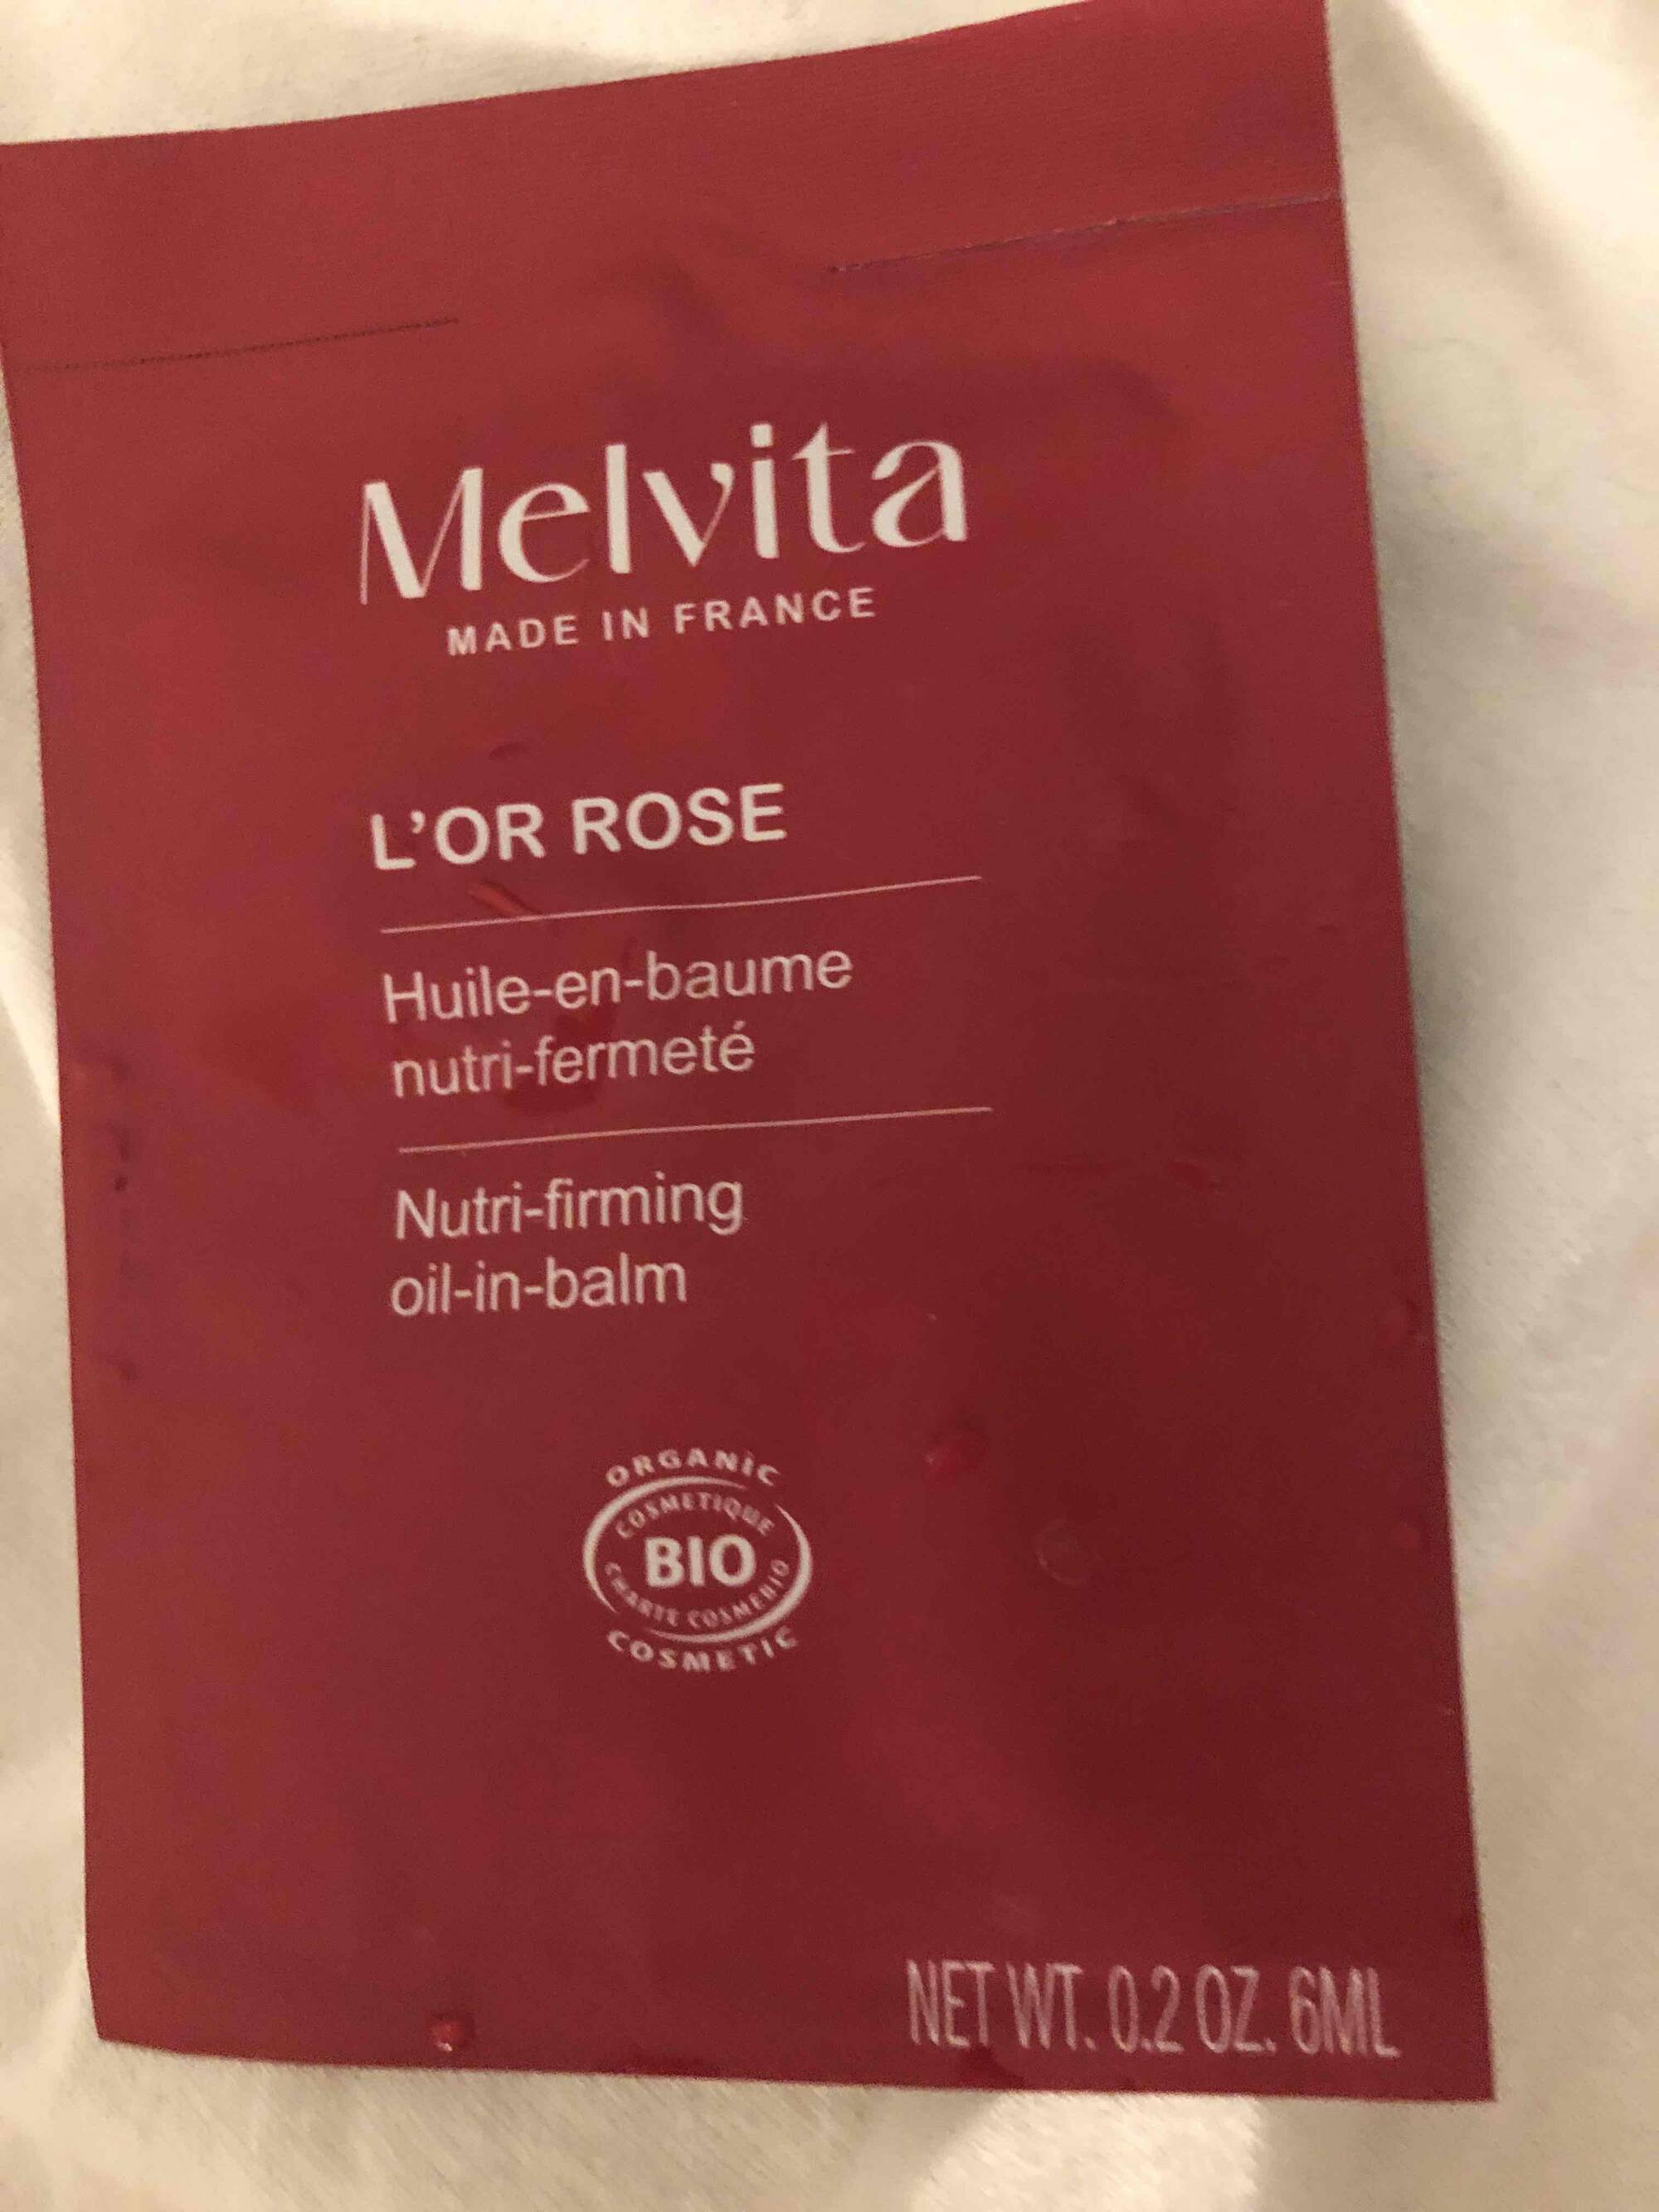 MELVITA - L’or rose - Huile-en-baume nutri-fermeté